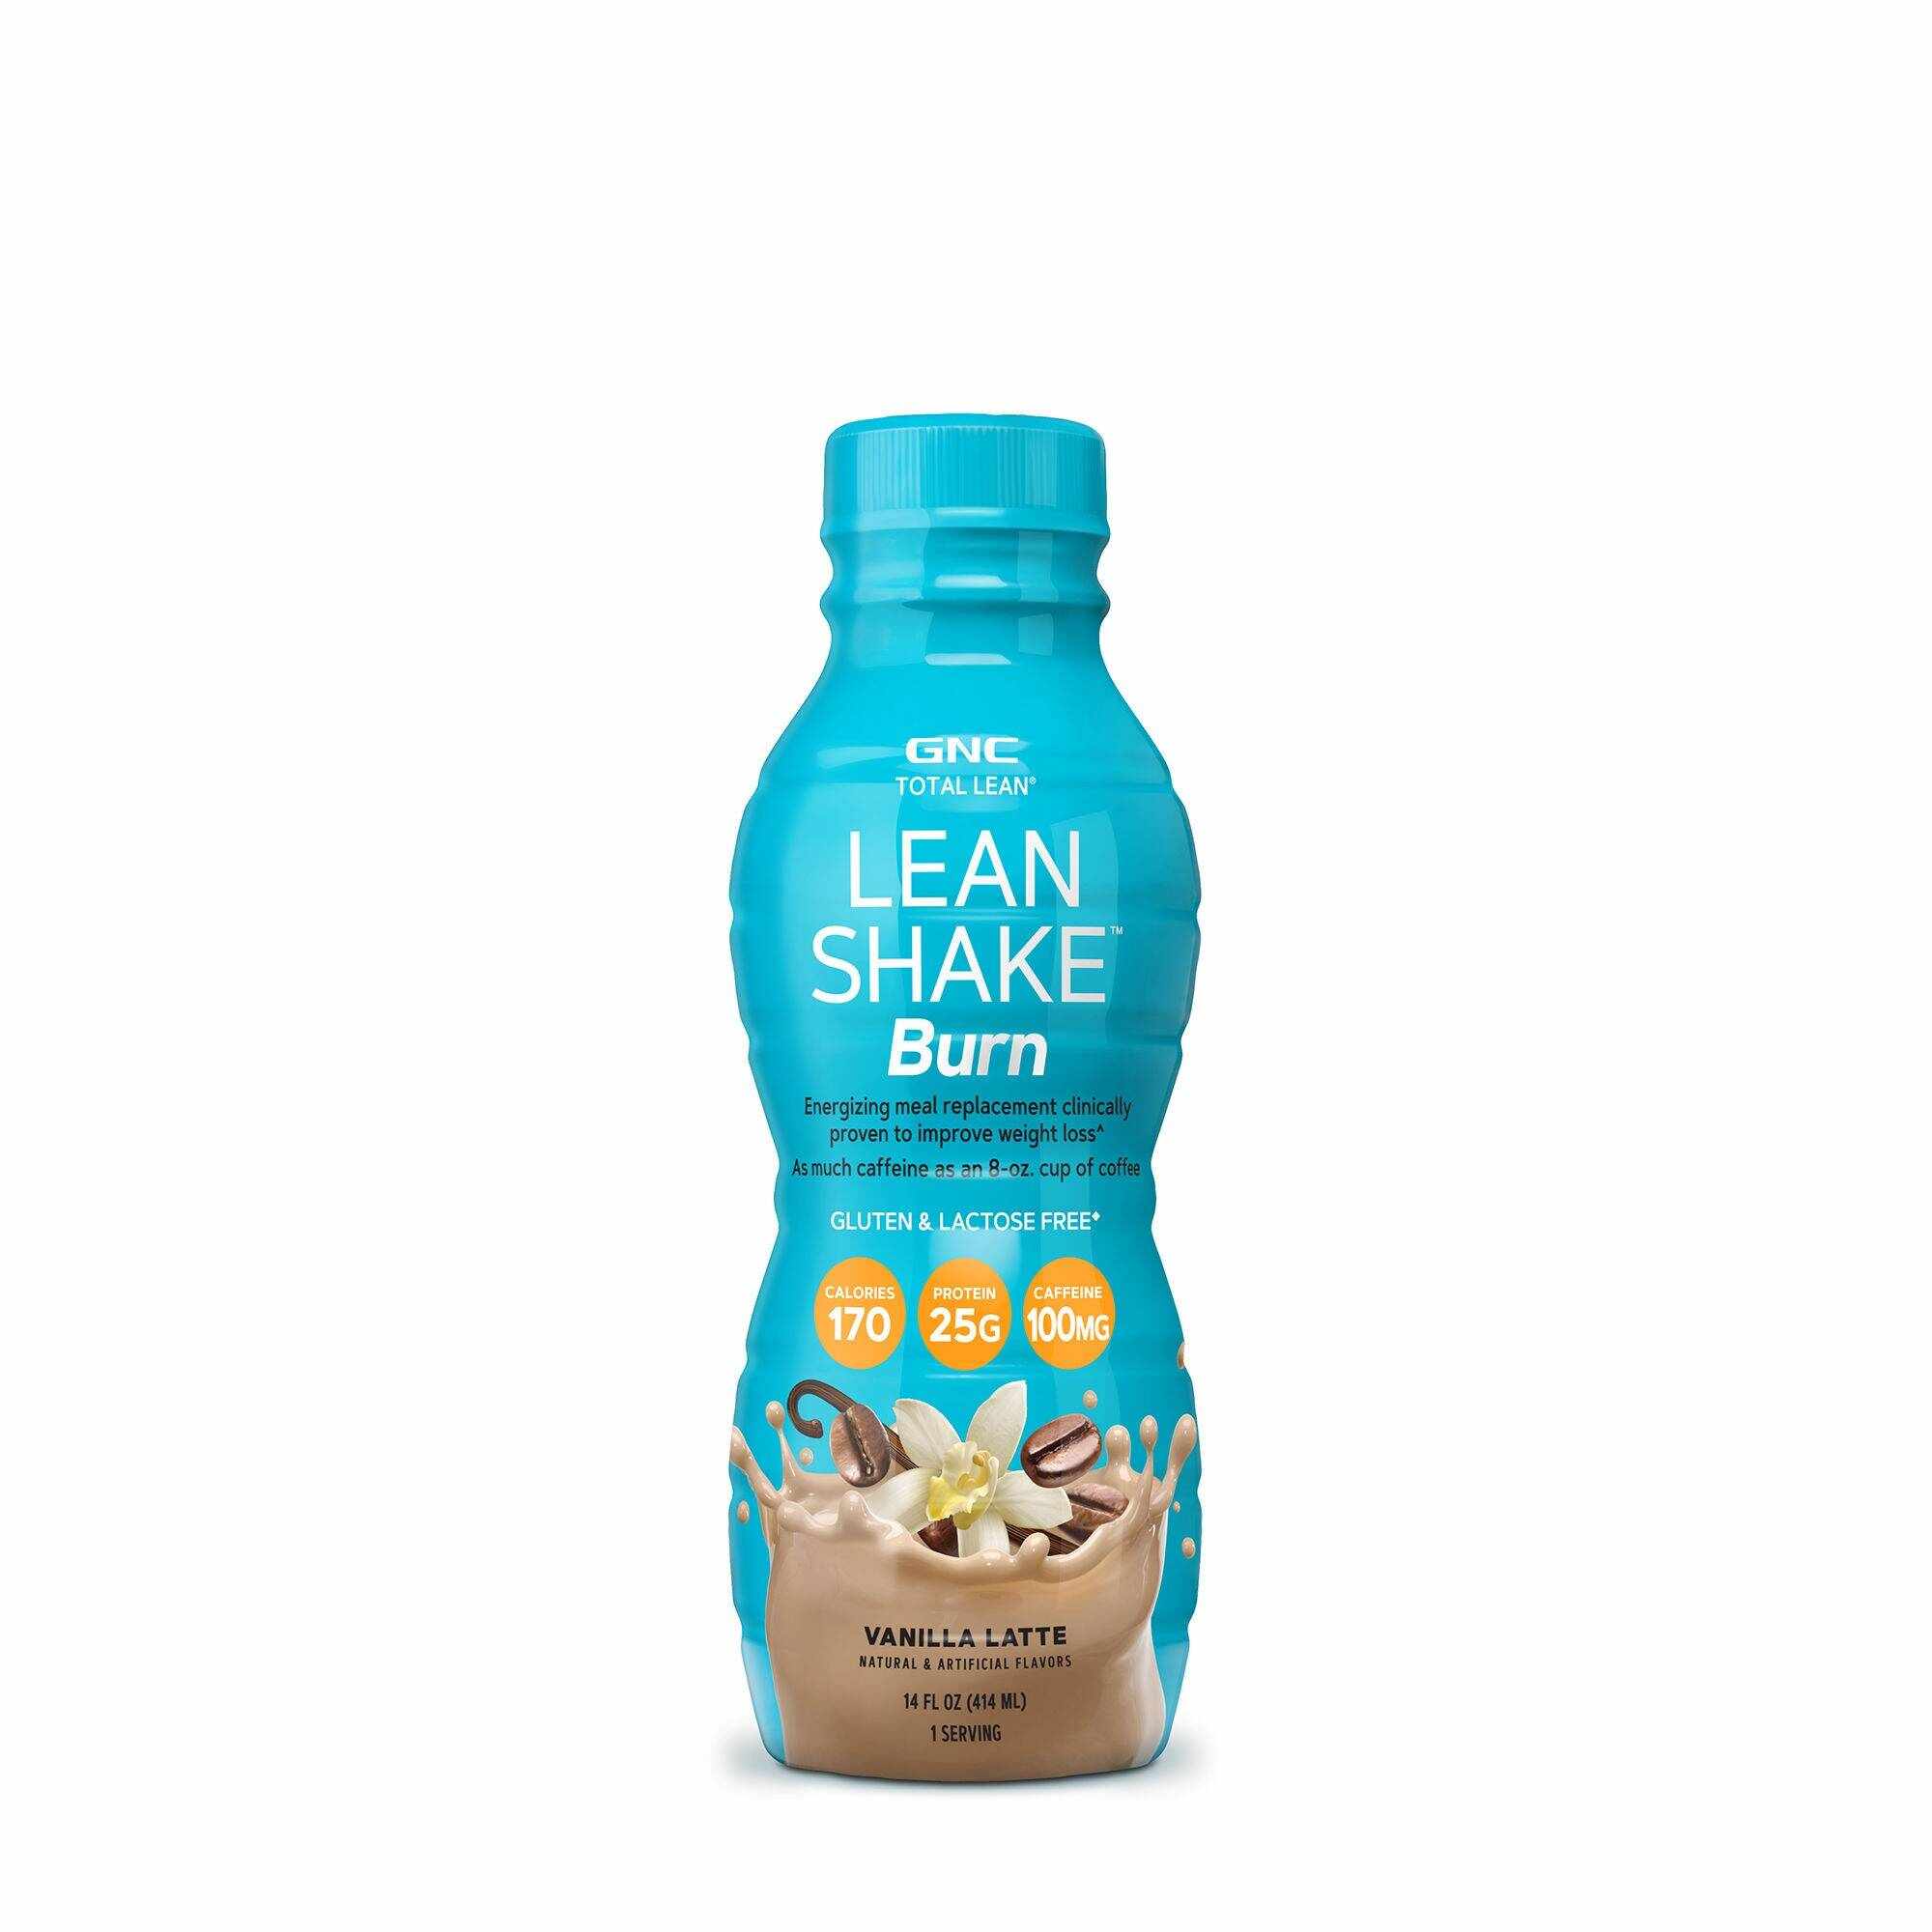 Total lean lean shake burn, shake proteic rtd cu aroma de vanilie si cafea, 414ml - Gnc